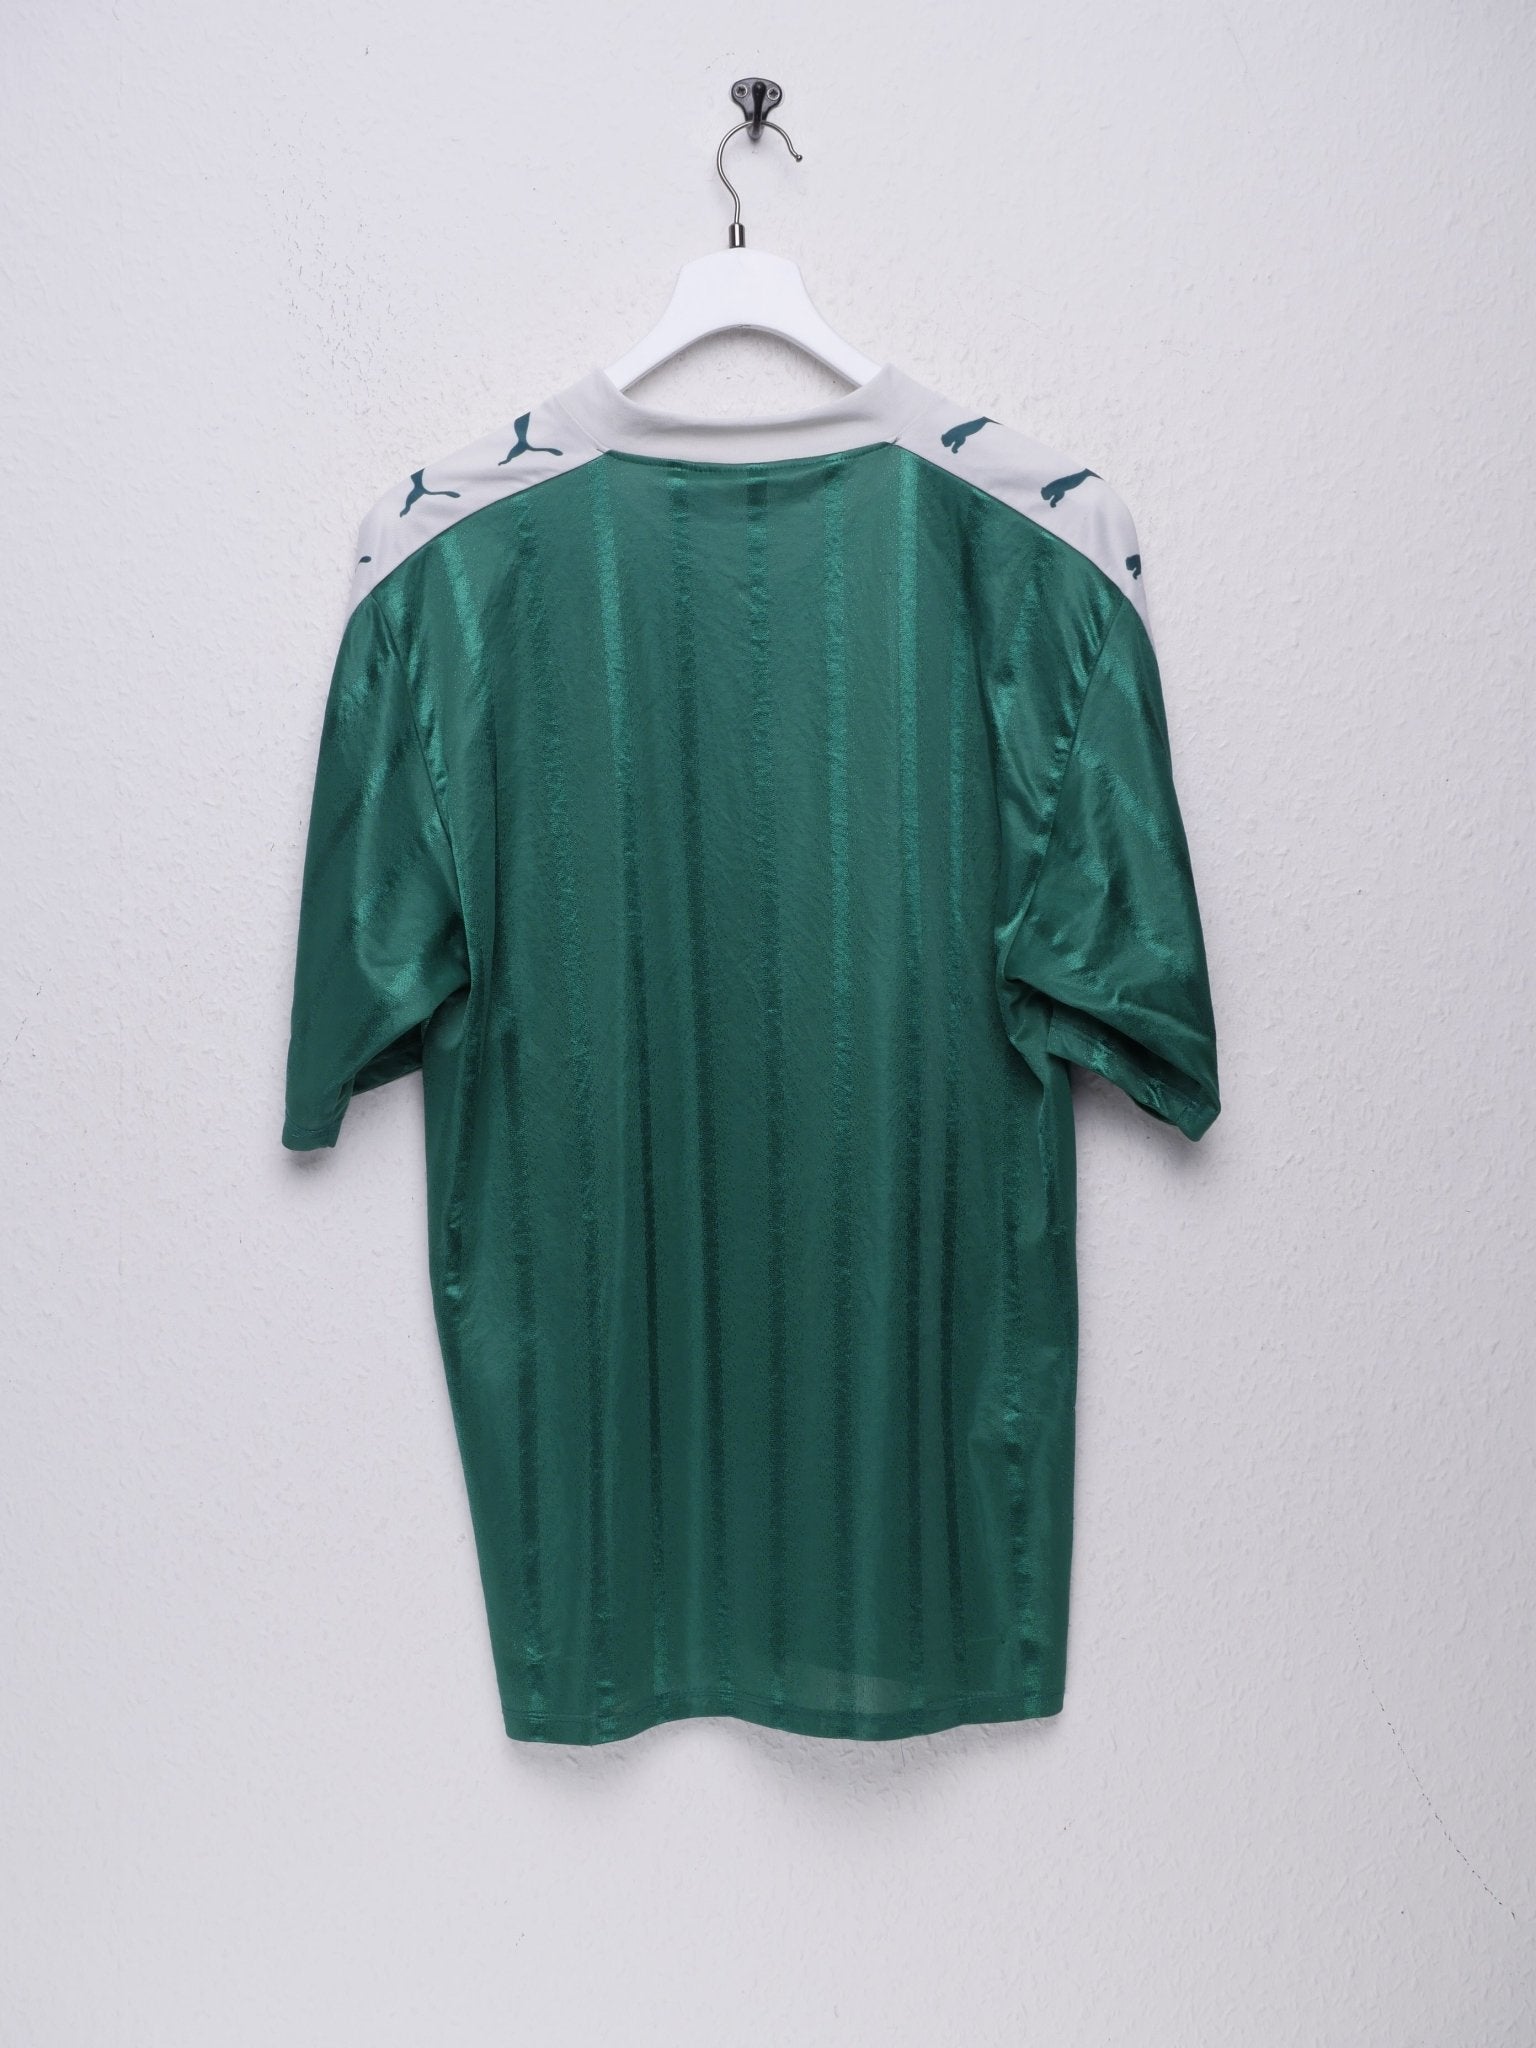 Puma Union Sportive Soccer Vintage Jersey Shirt - Peeces